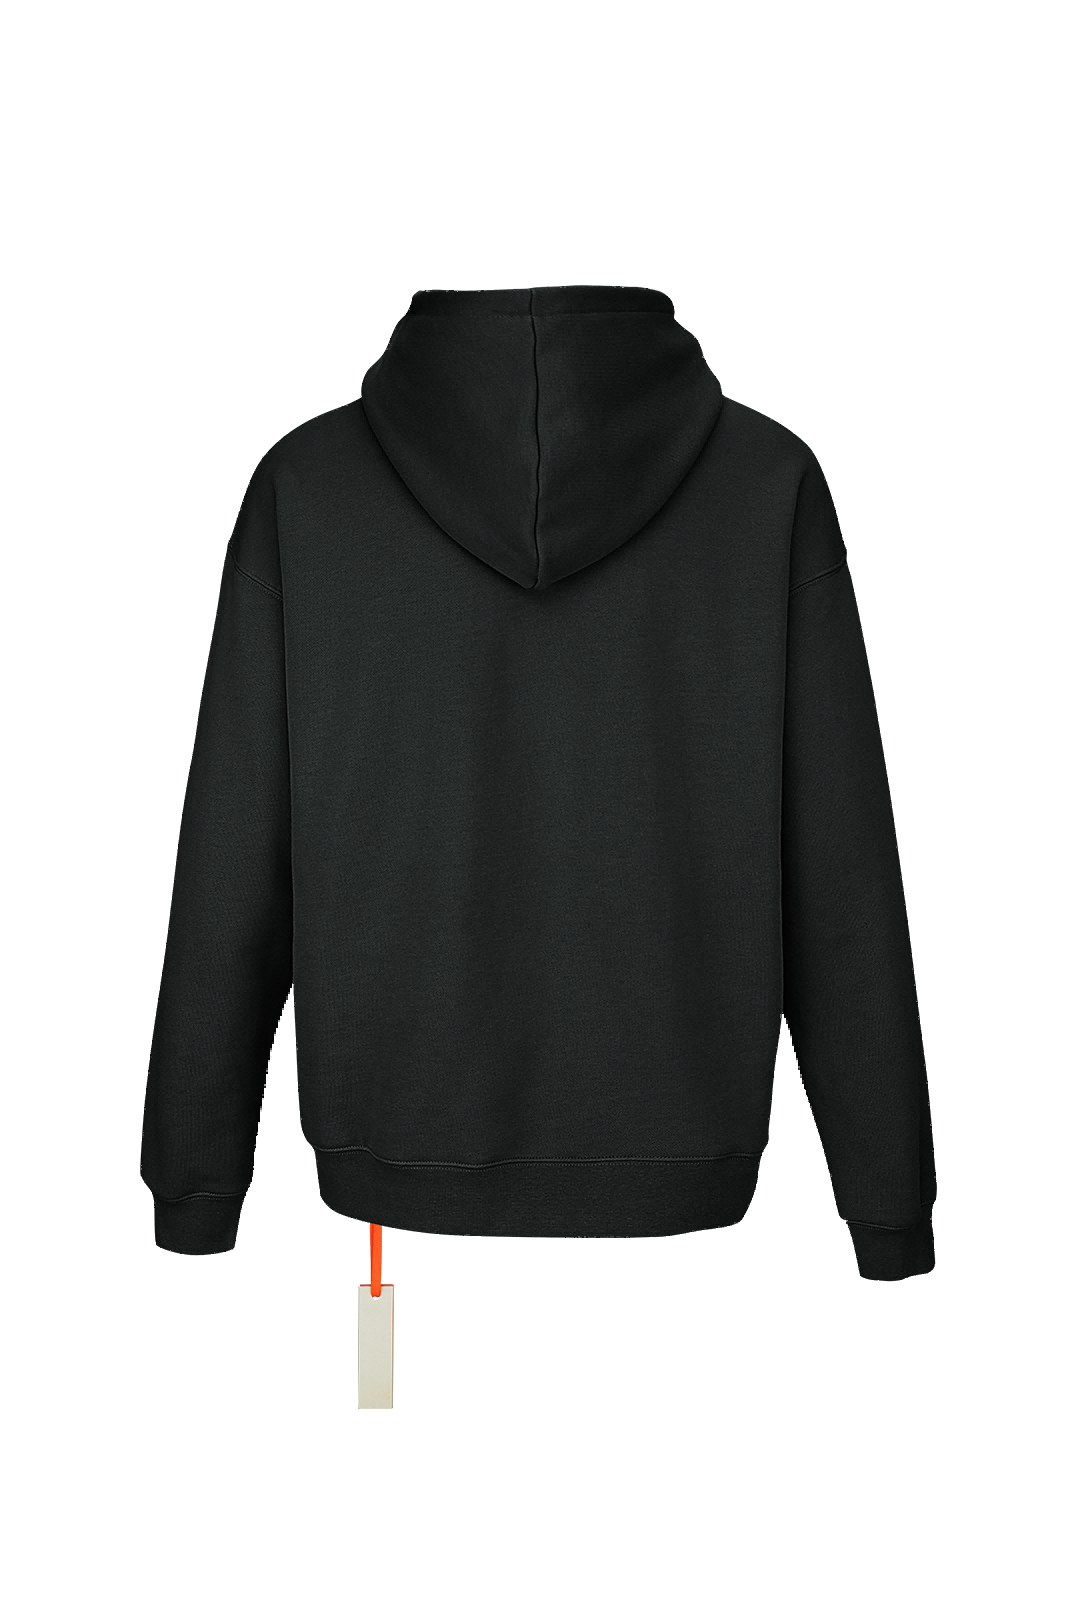 1# Arrows Men's Sweatshirt Hoodie